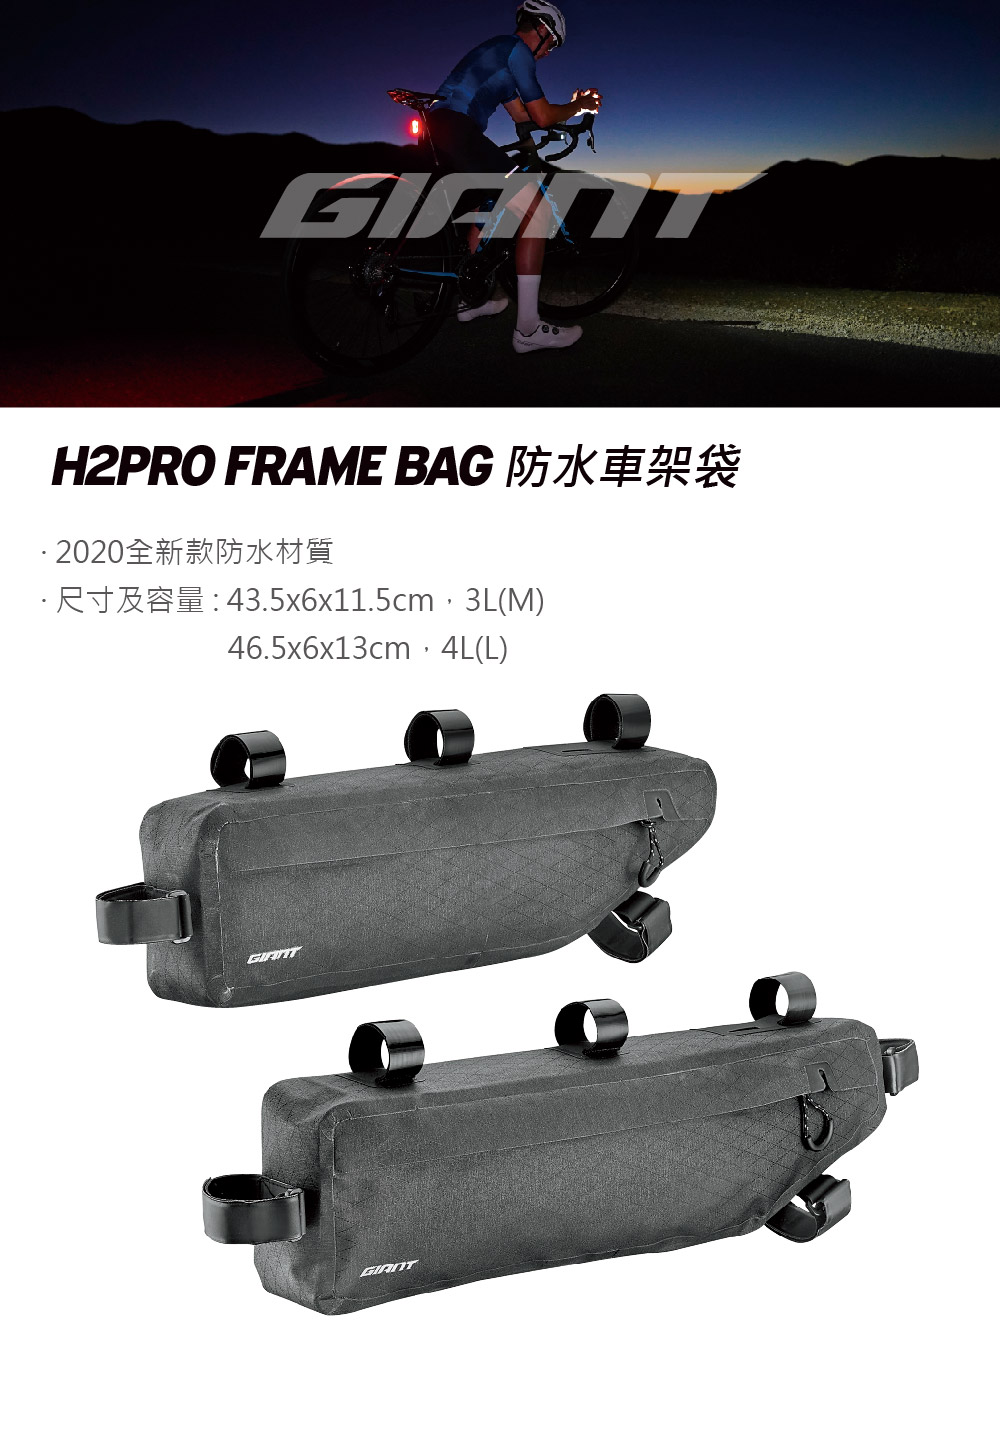 giant h2pro frame bag